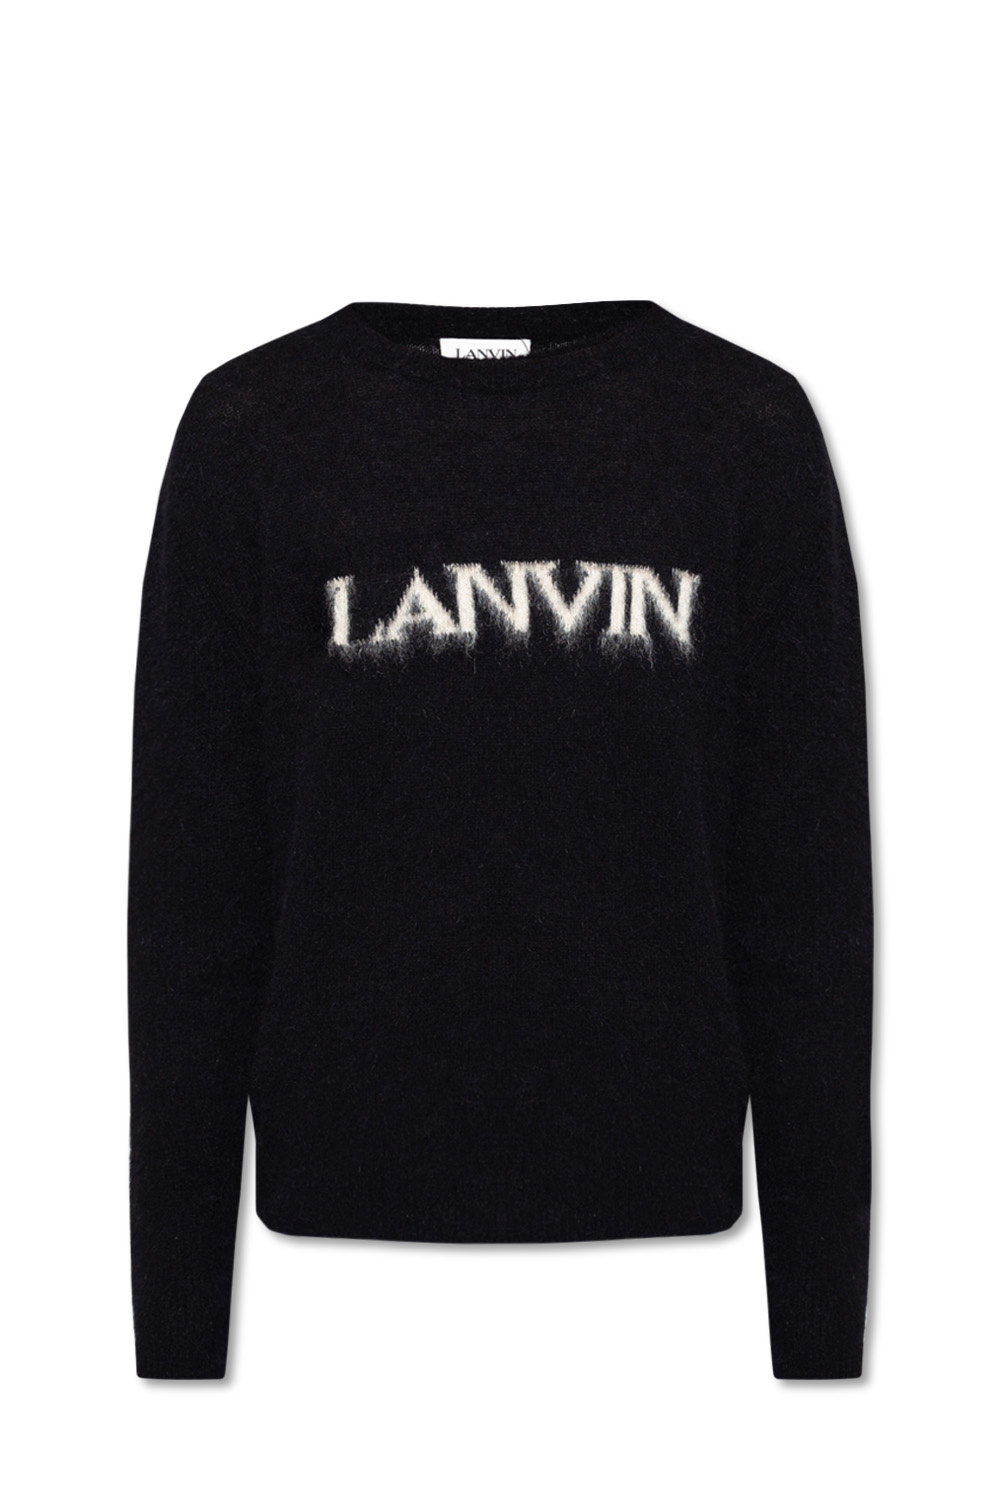 Lanvin Sweater with logo | Men's Clothing | IetpShops